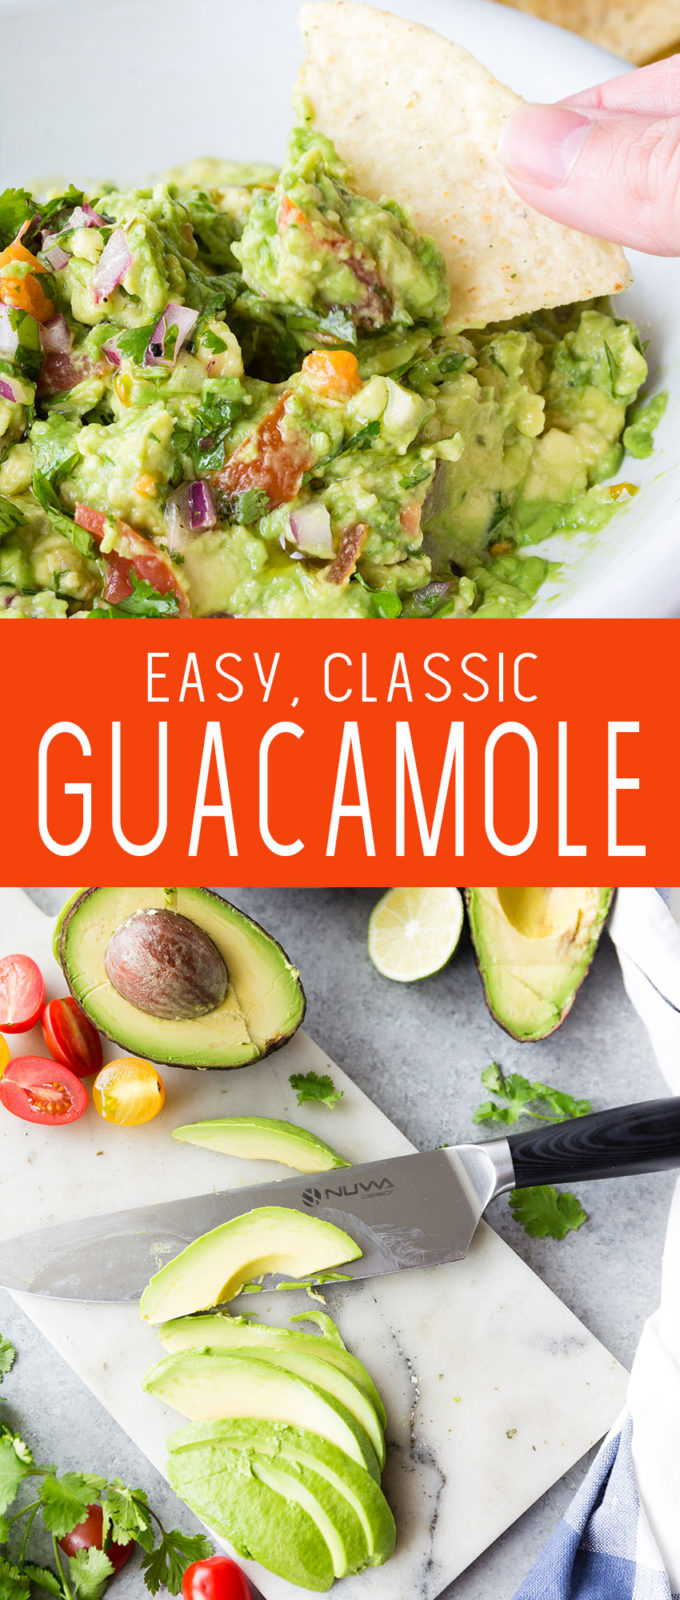 Easy Classic Guacamole, this Guacamole is made with delicious avocado, cilantro, and onion. 